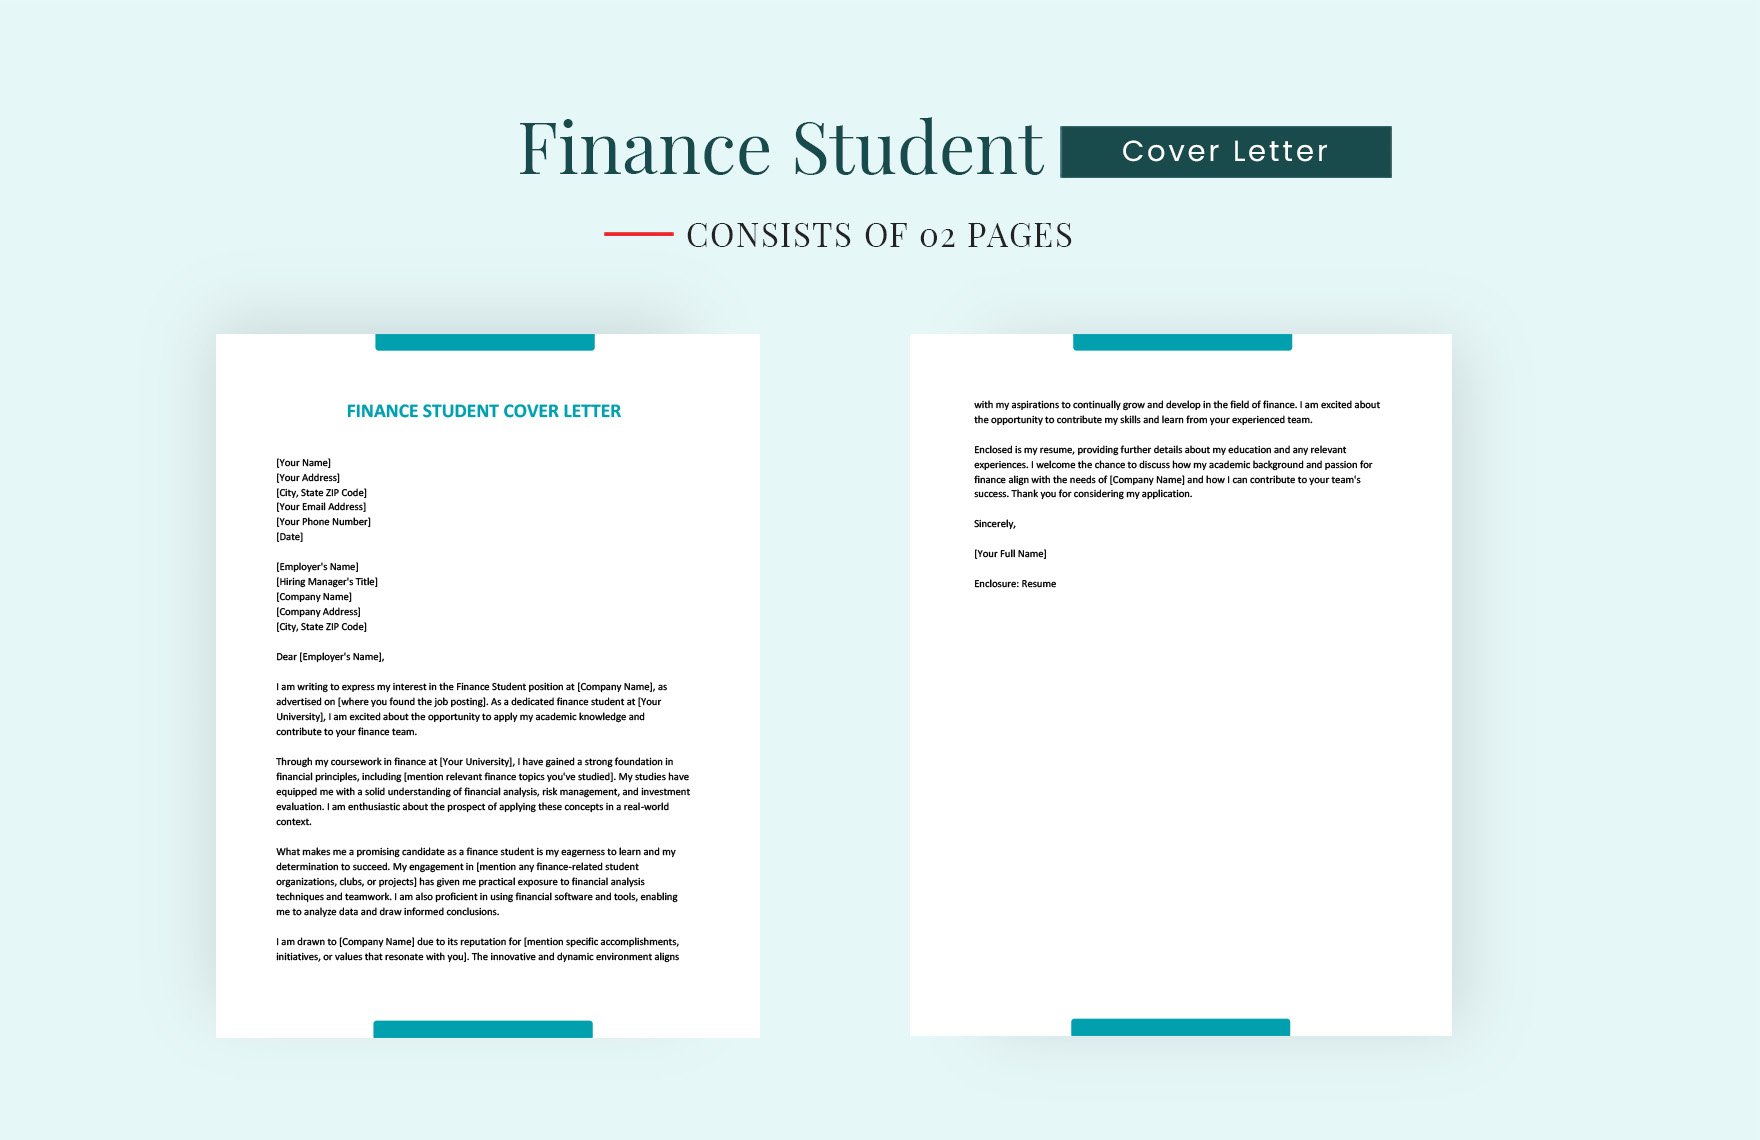 Finance Student Cover Letter